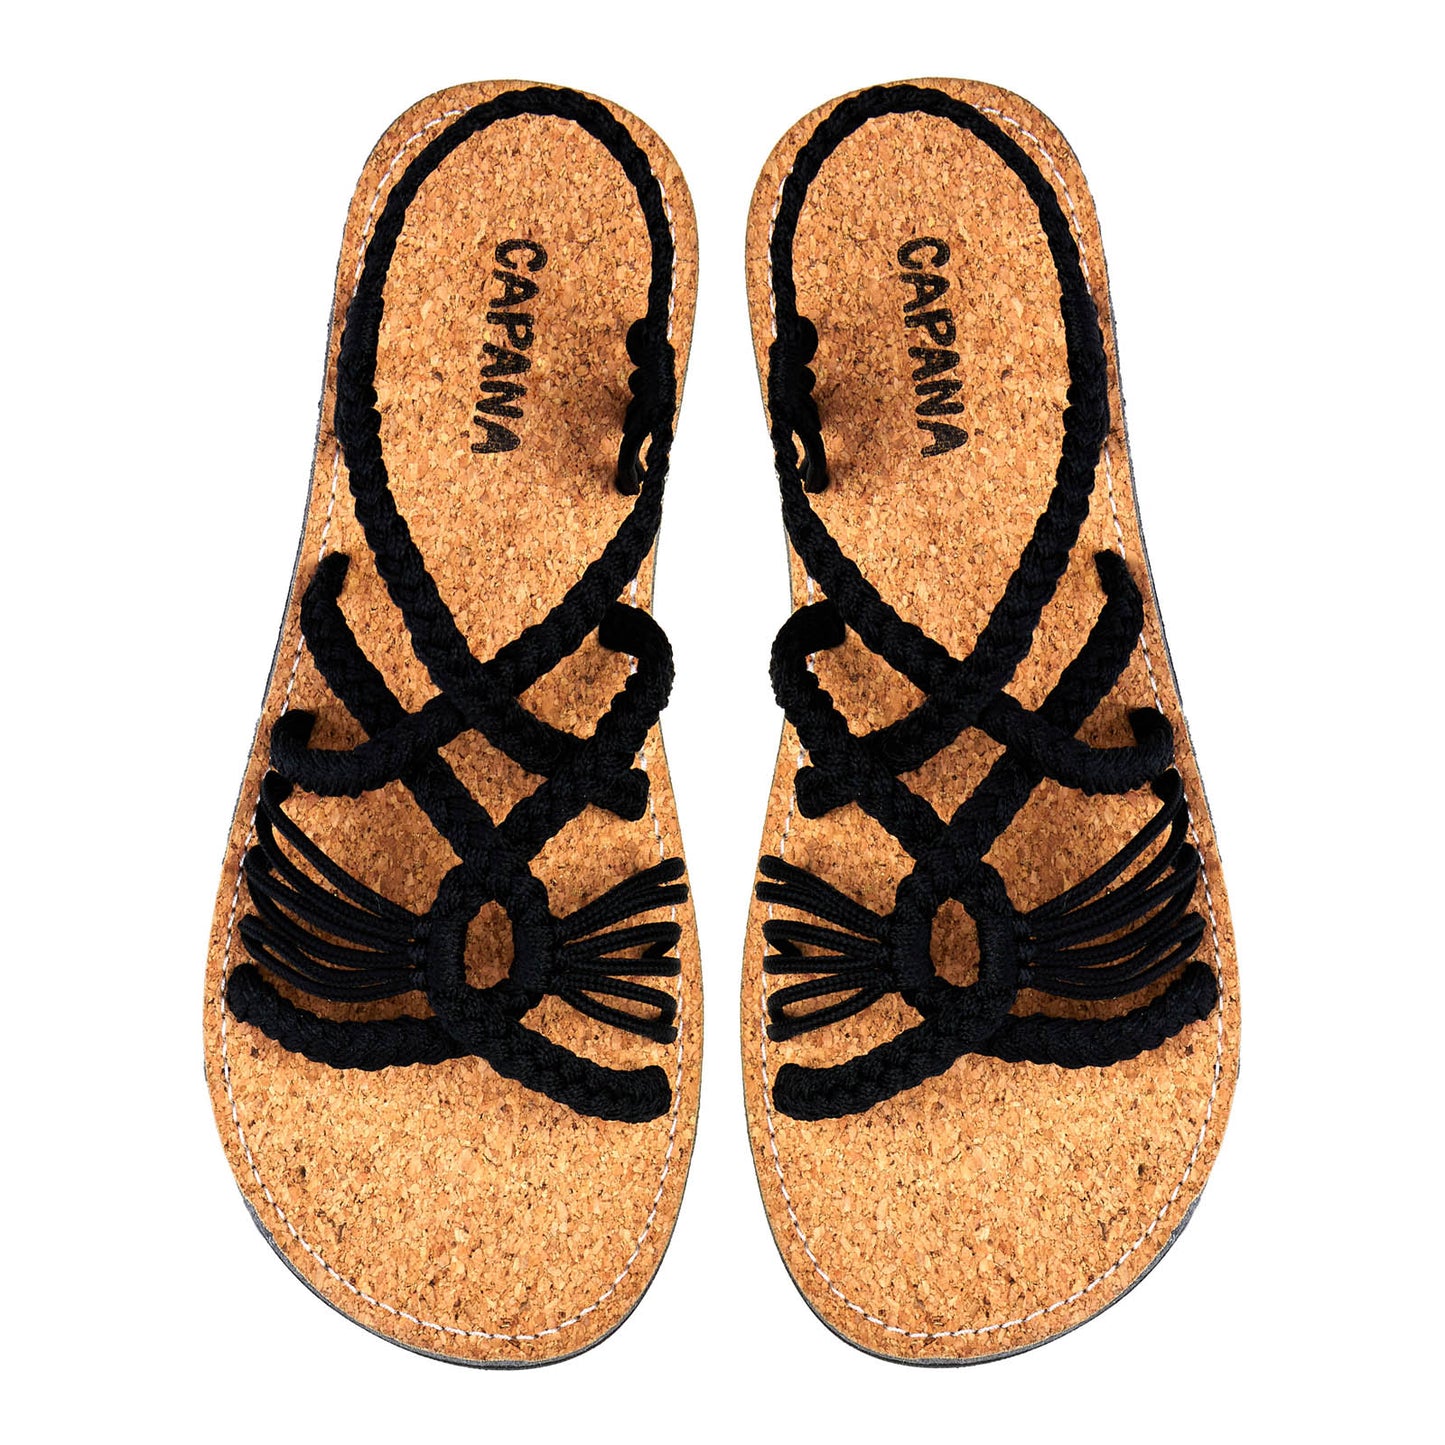 Relax Black Cork Rope Sandals Midnight Open toe wider design Flat Handmade sandals for women